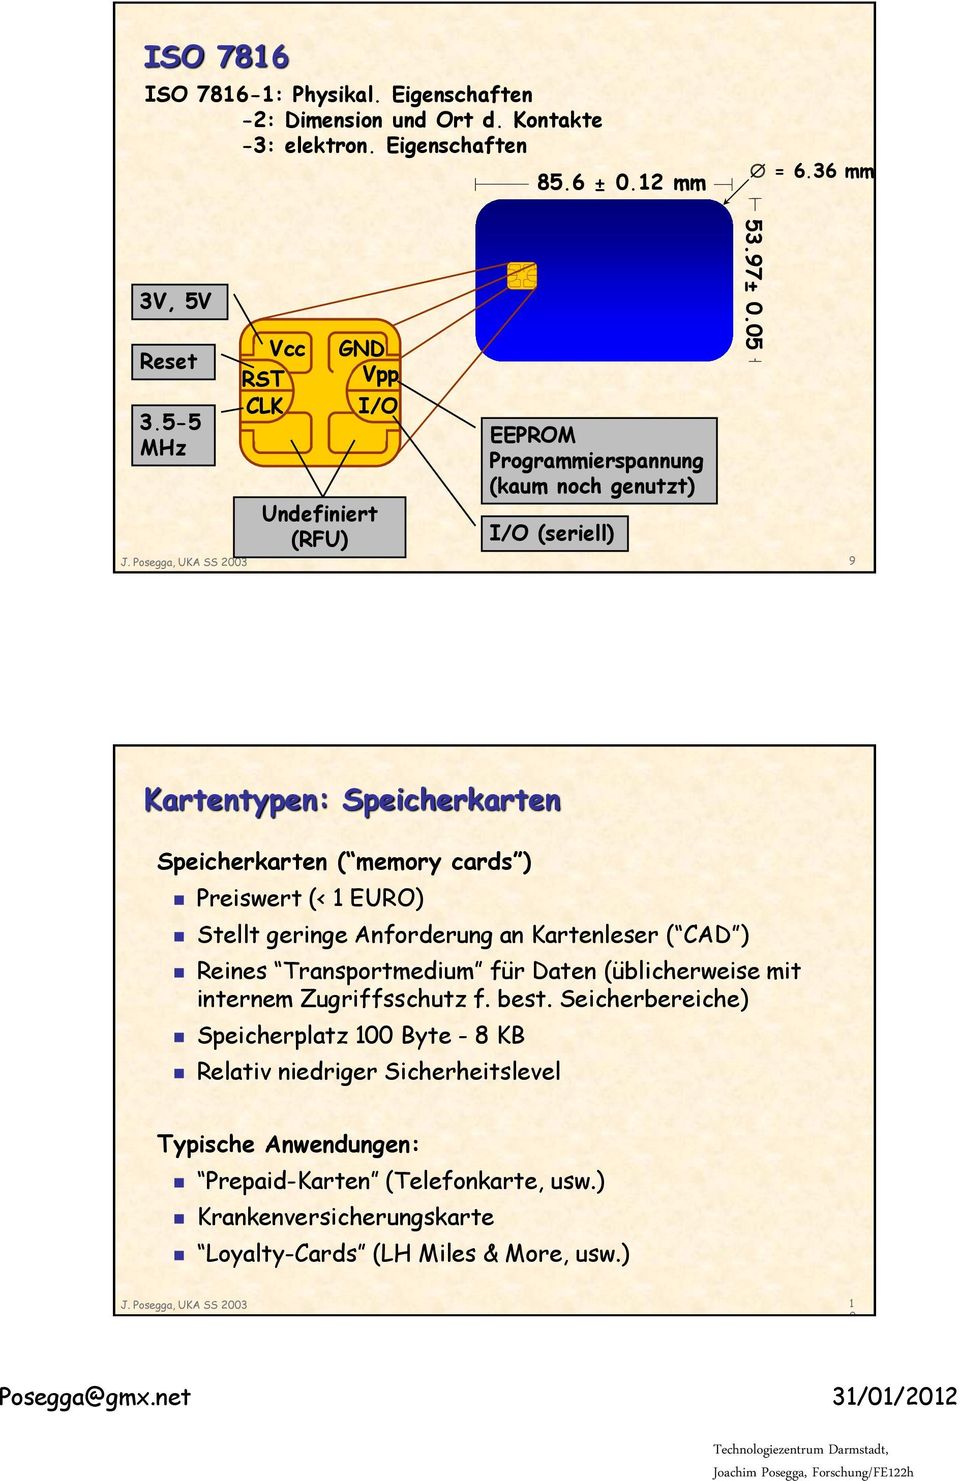 Posegga, UKA SS 2003 9 Kartentypen: Speicherkarten Speicherkarten ( memory cards ) Preiswert (< 1 EURO) Stellt geringe Anforderung an Kartenleser ( CAD ) Reines Transportmedium